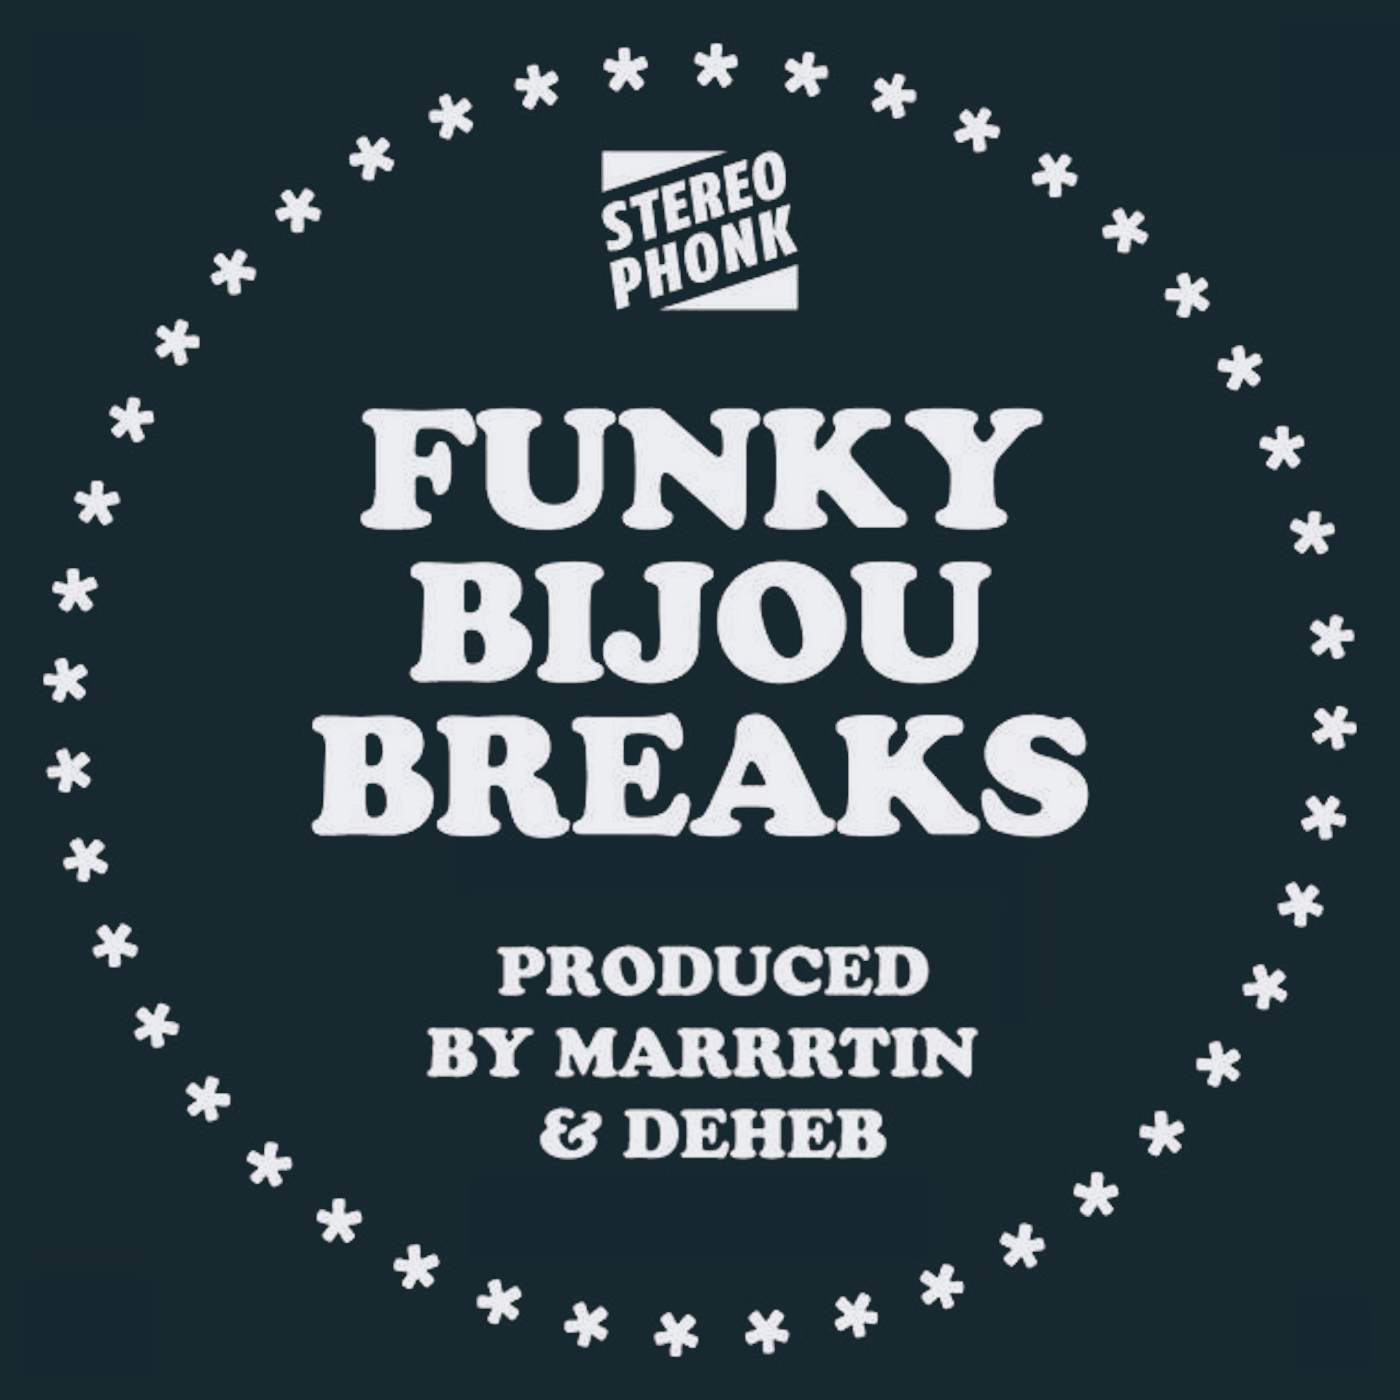 Funky Bijou